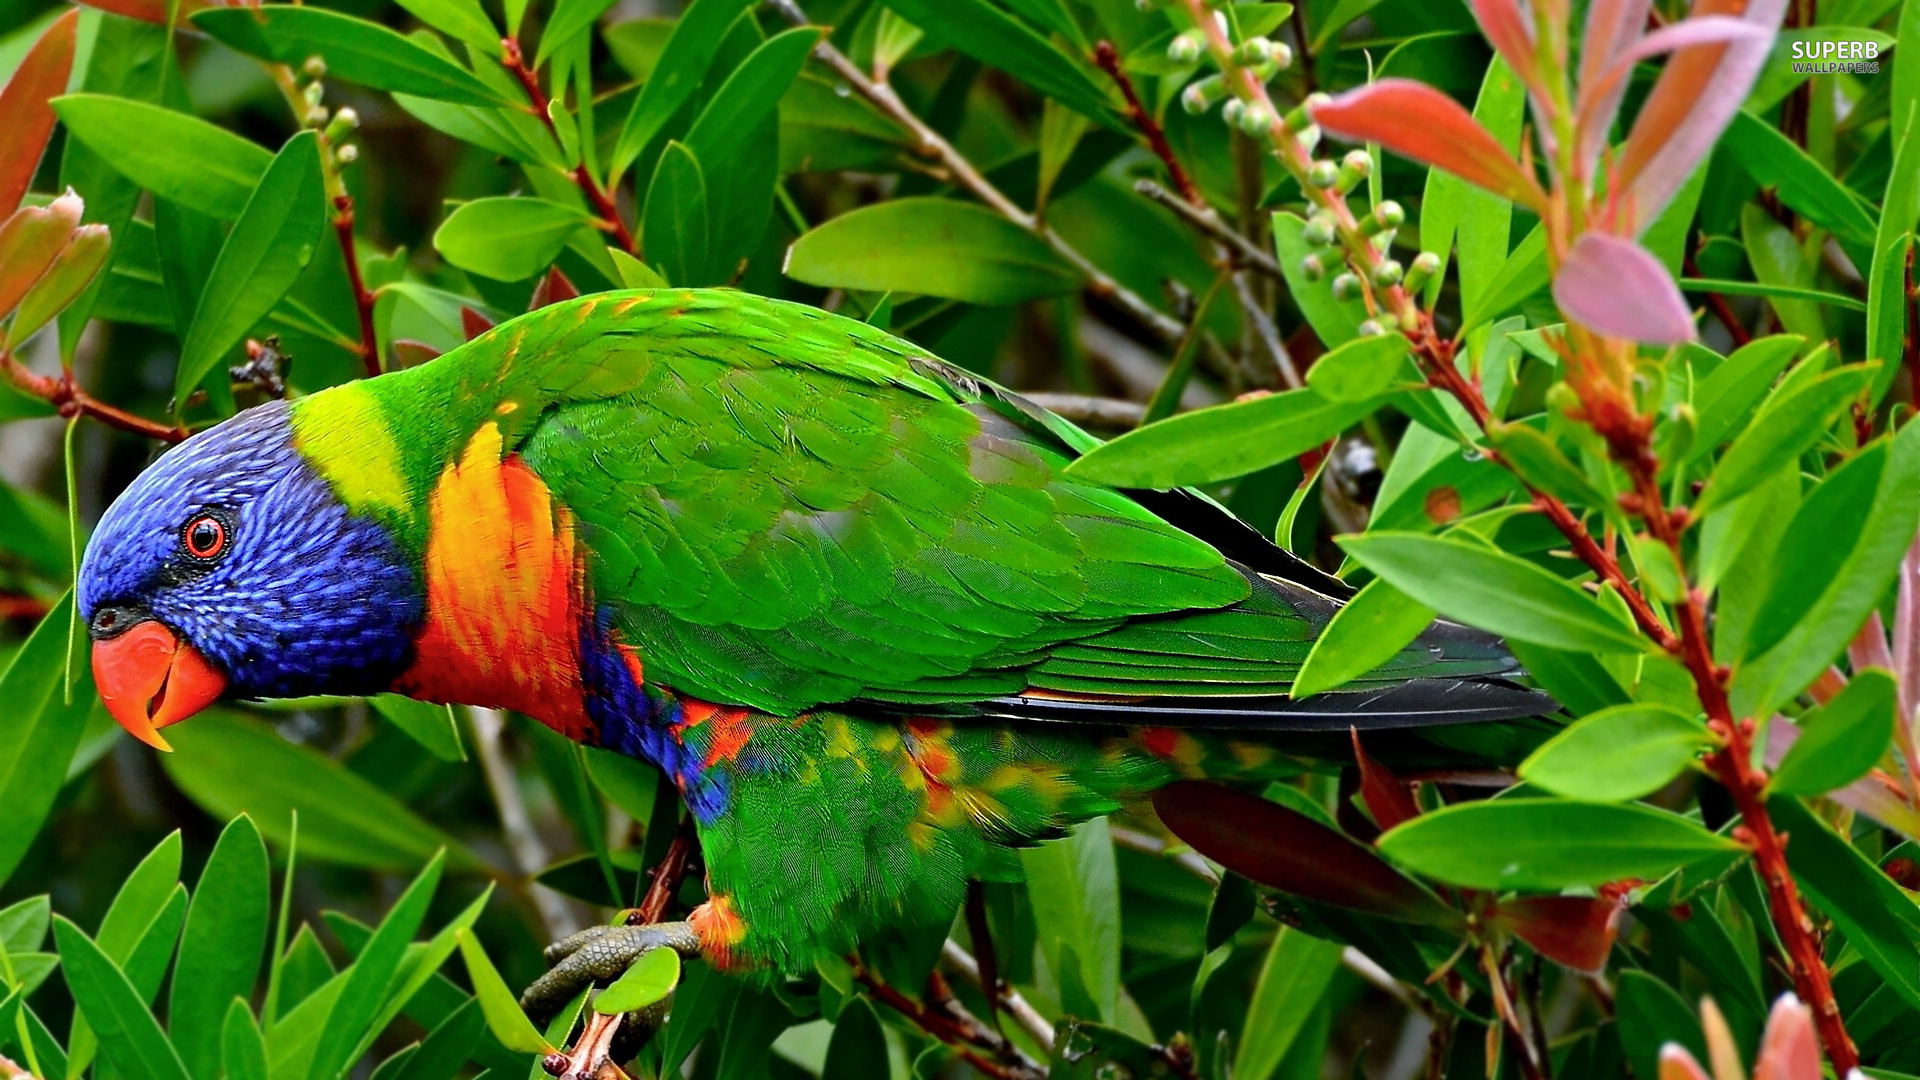 297742 descargar imagen animales, loro arcoiris, aves: fondos de pantalla y protectores de pantalla gratis